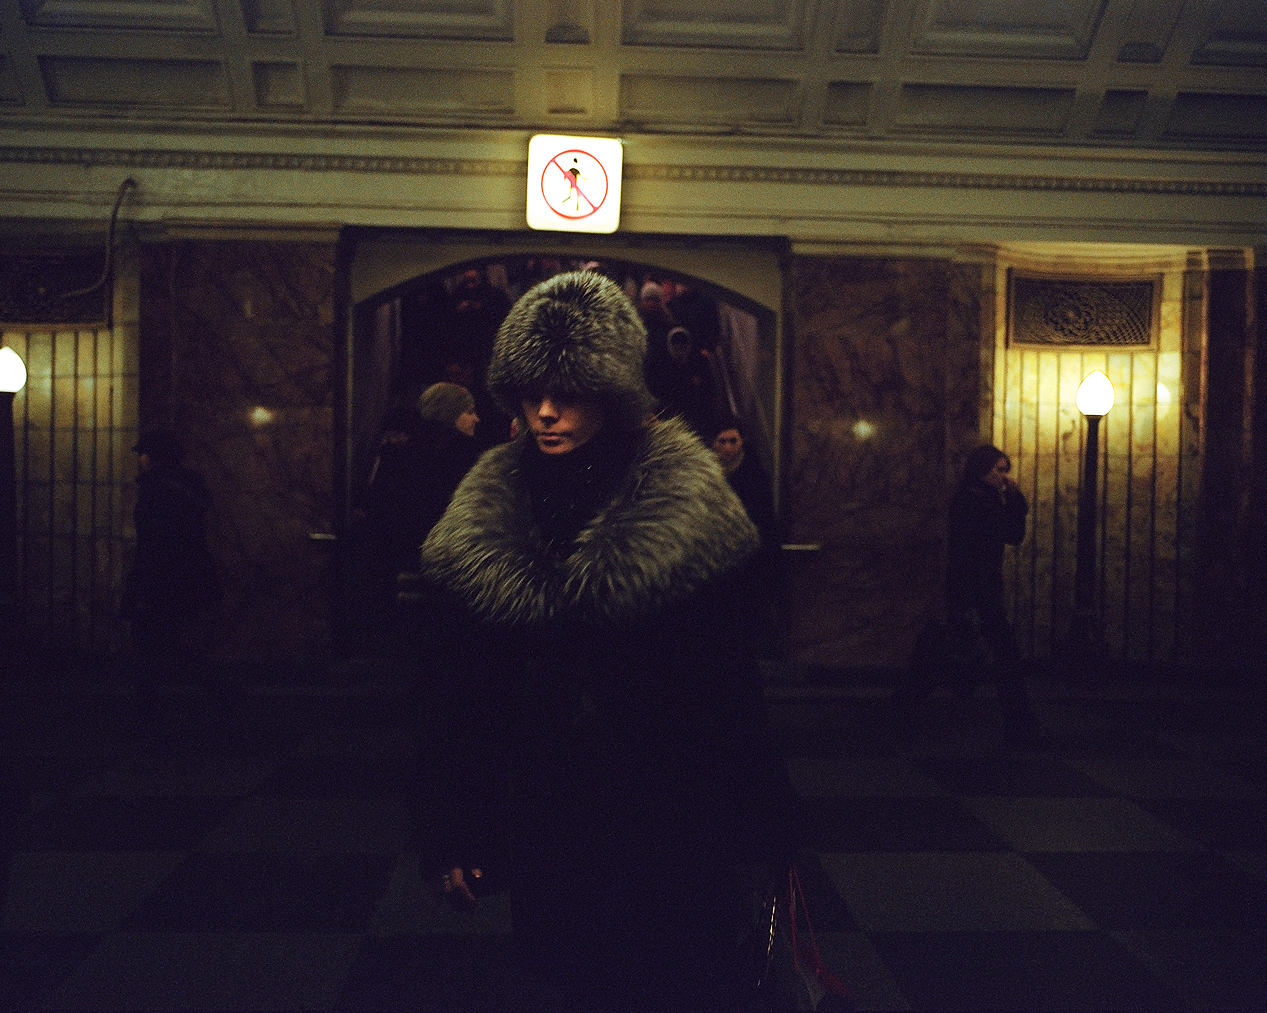 métro moscovite